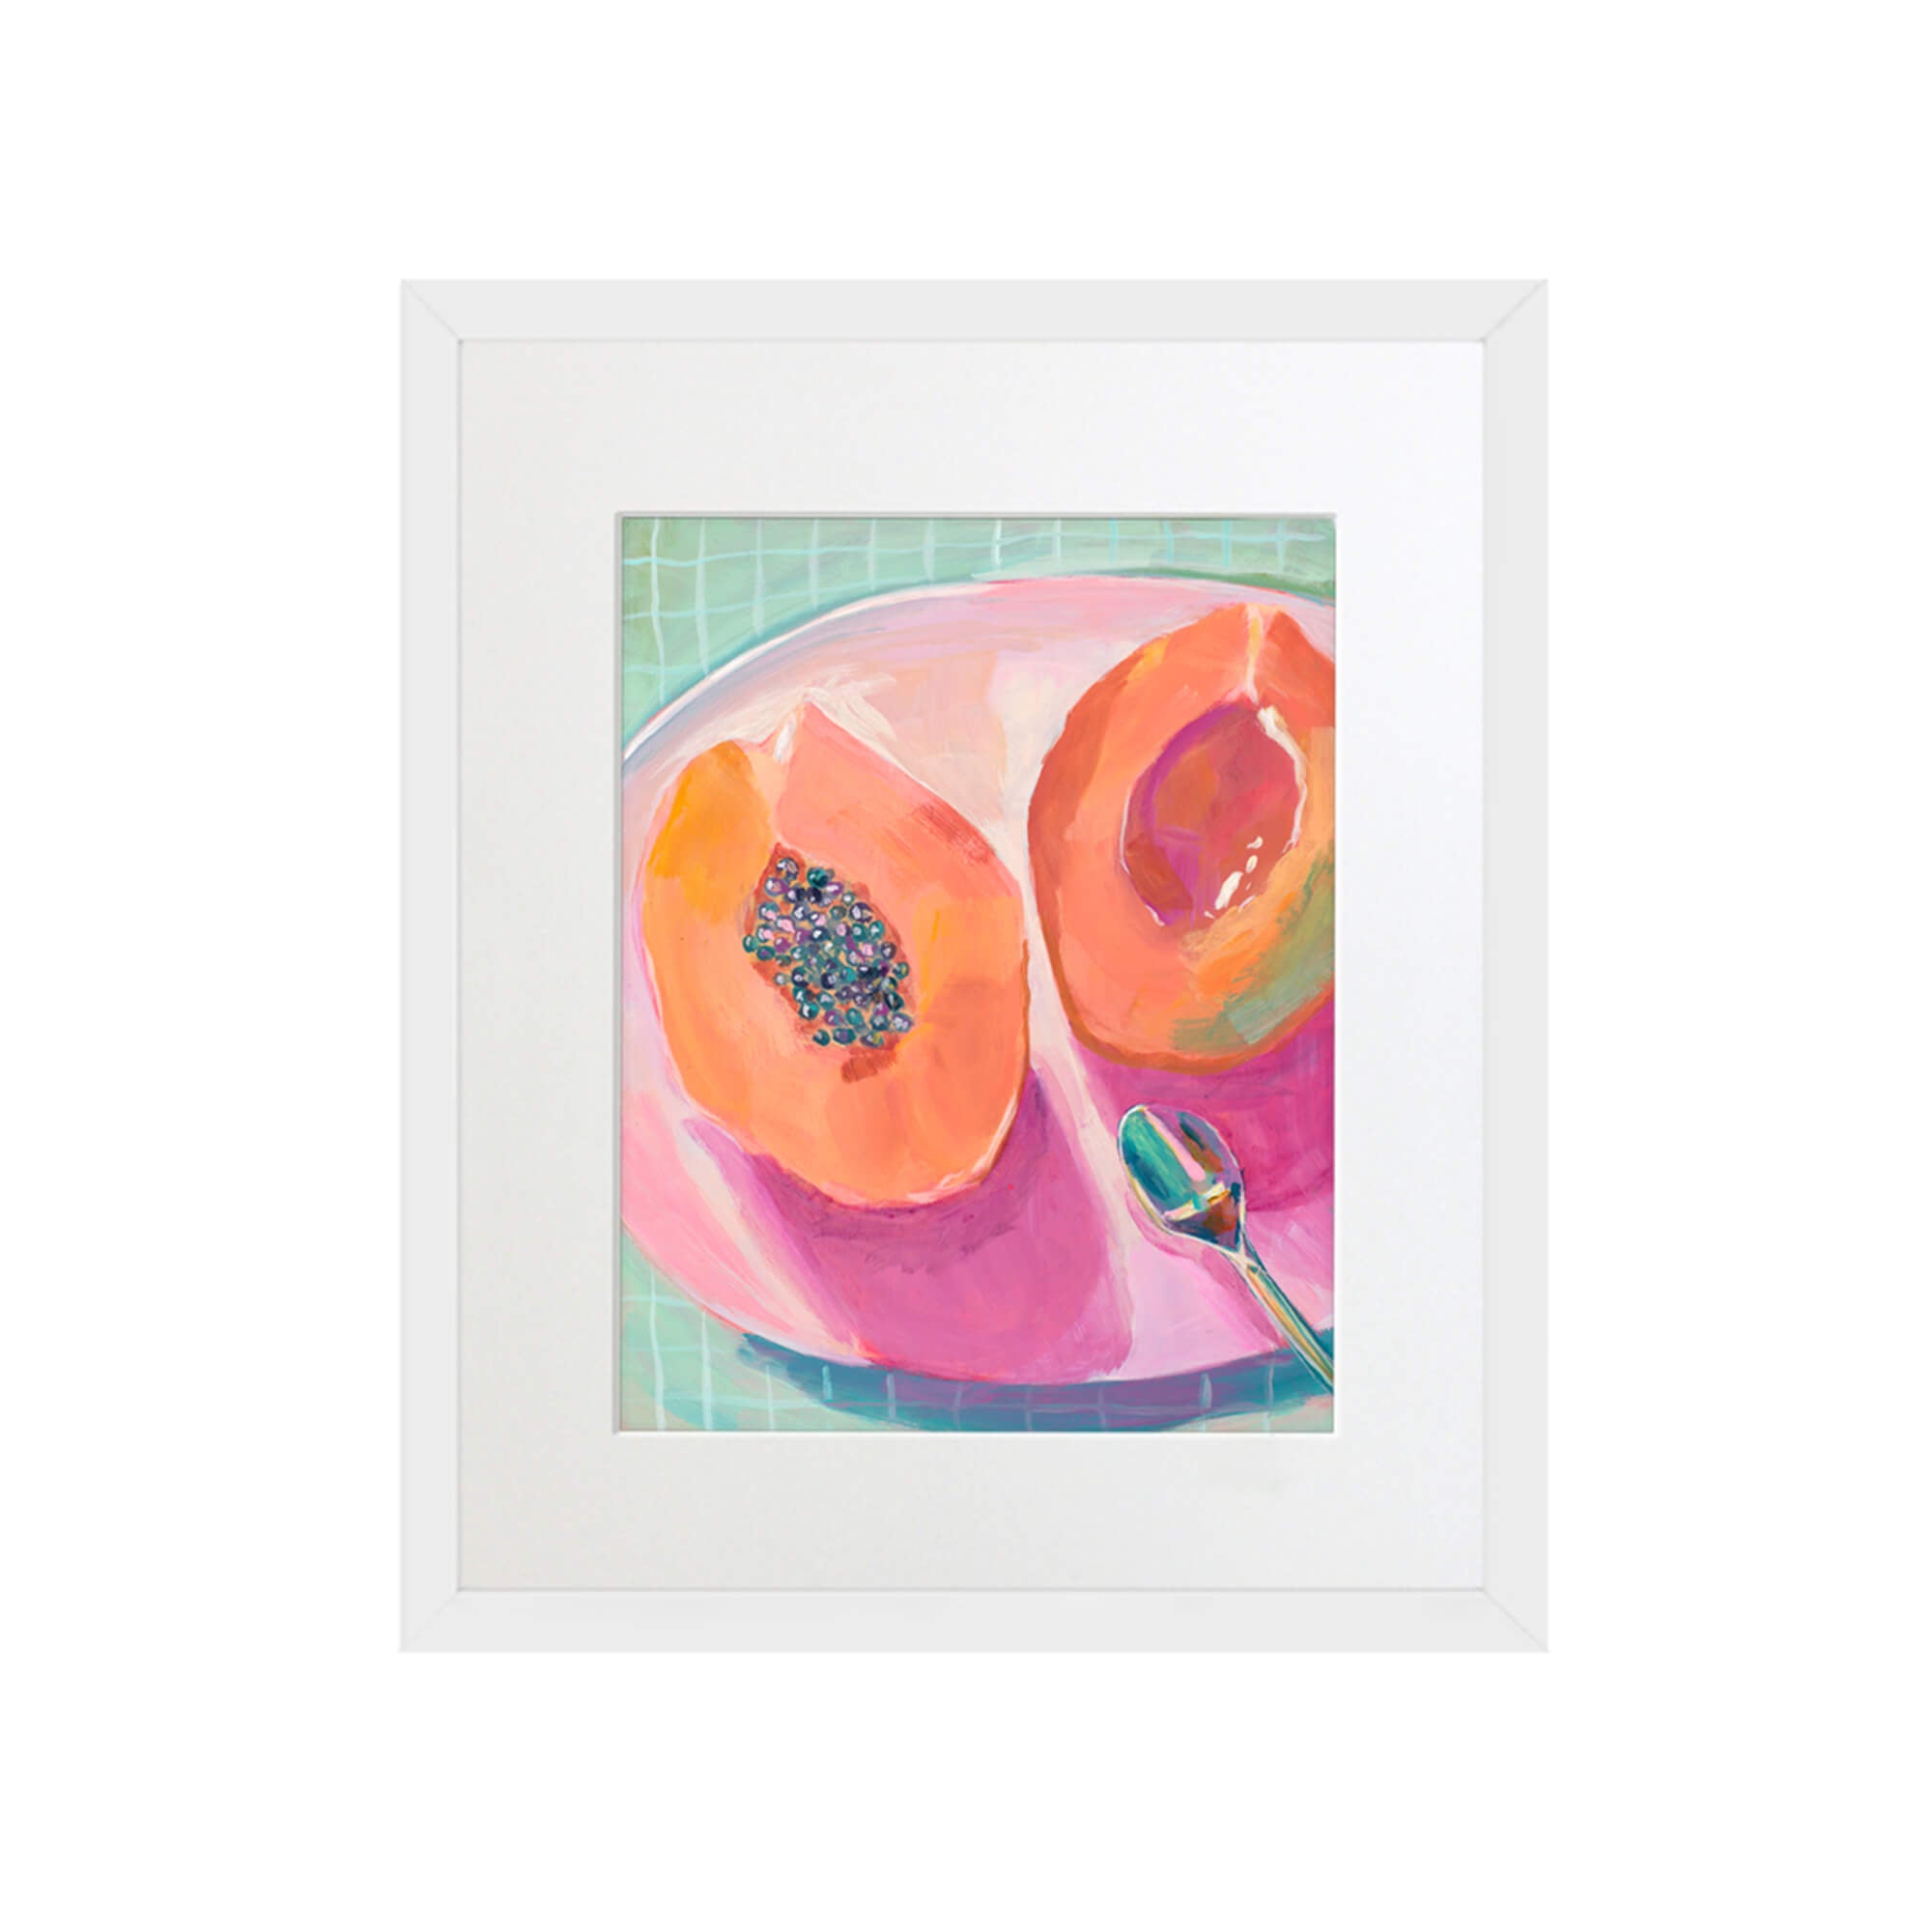 A depiction of papaya fruit by Hawaii artist Lindsay Wilkins